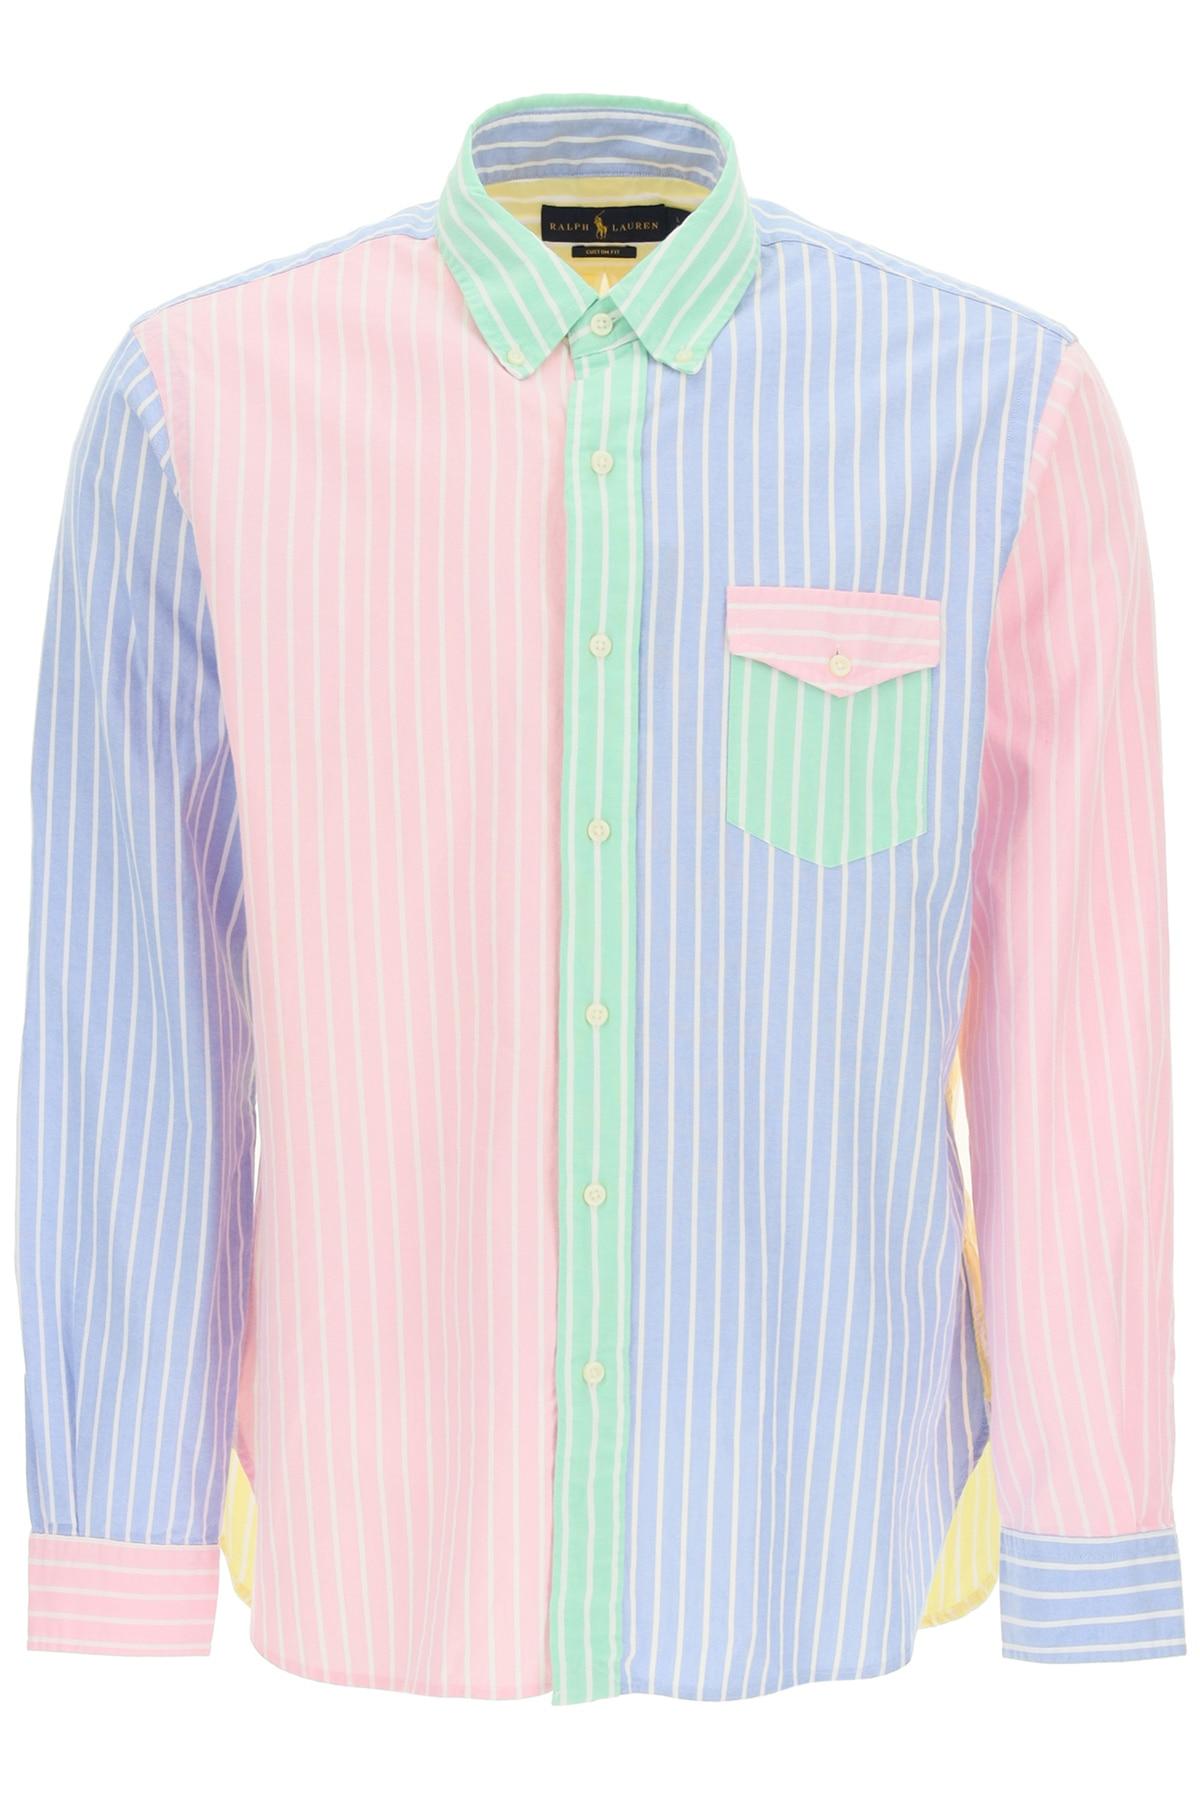 Polo Ralph Lauren Multicolor Striped Oxford Shirt S Cotton for Men | Lyst  Canada